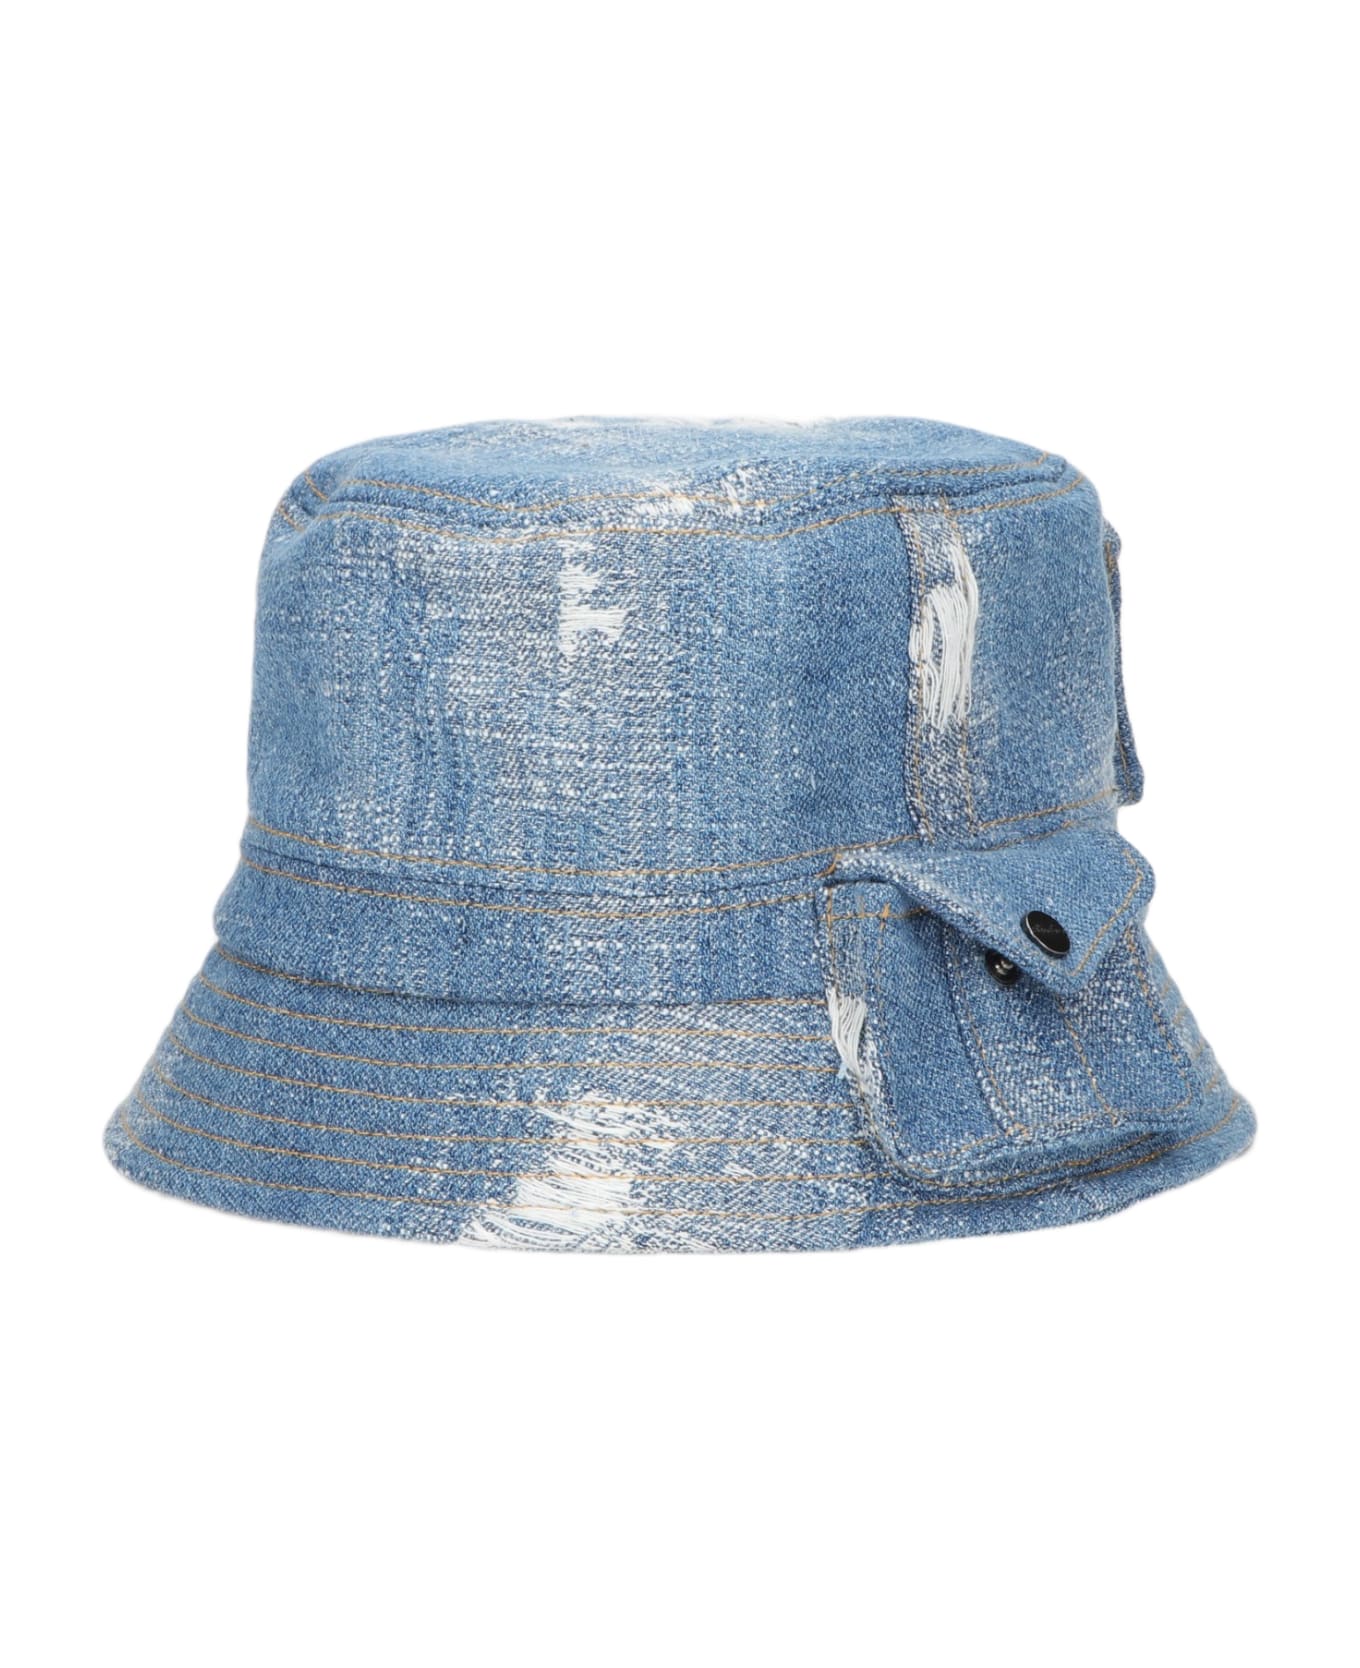 Borsalino Worker Bucket - DENIM 帽子